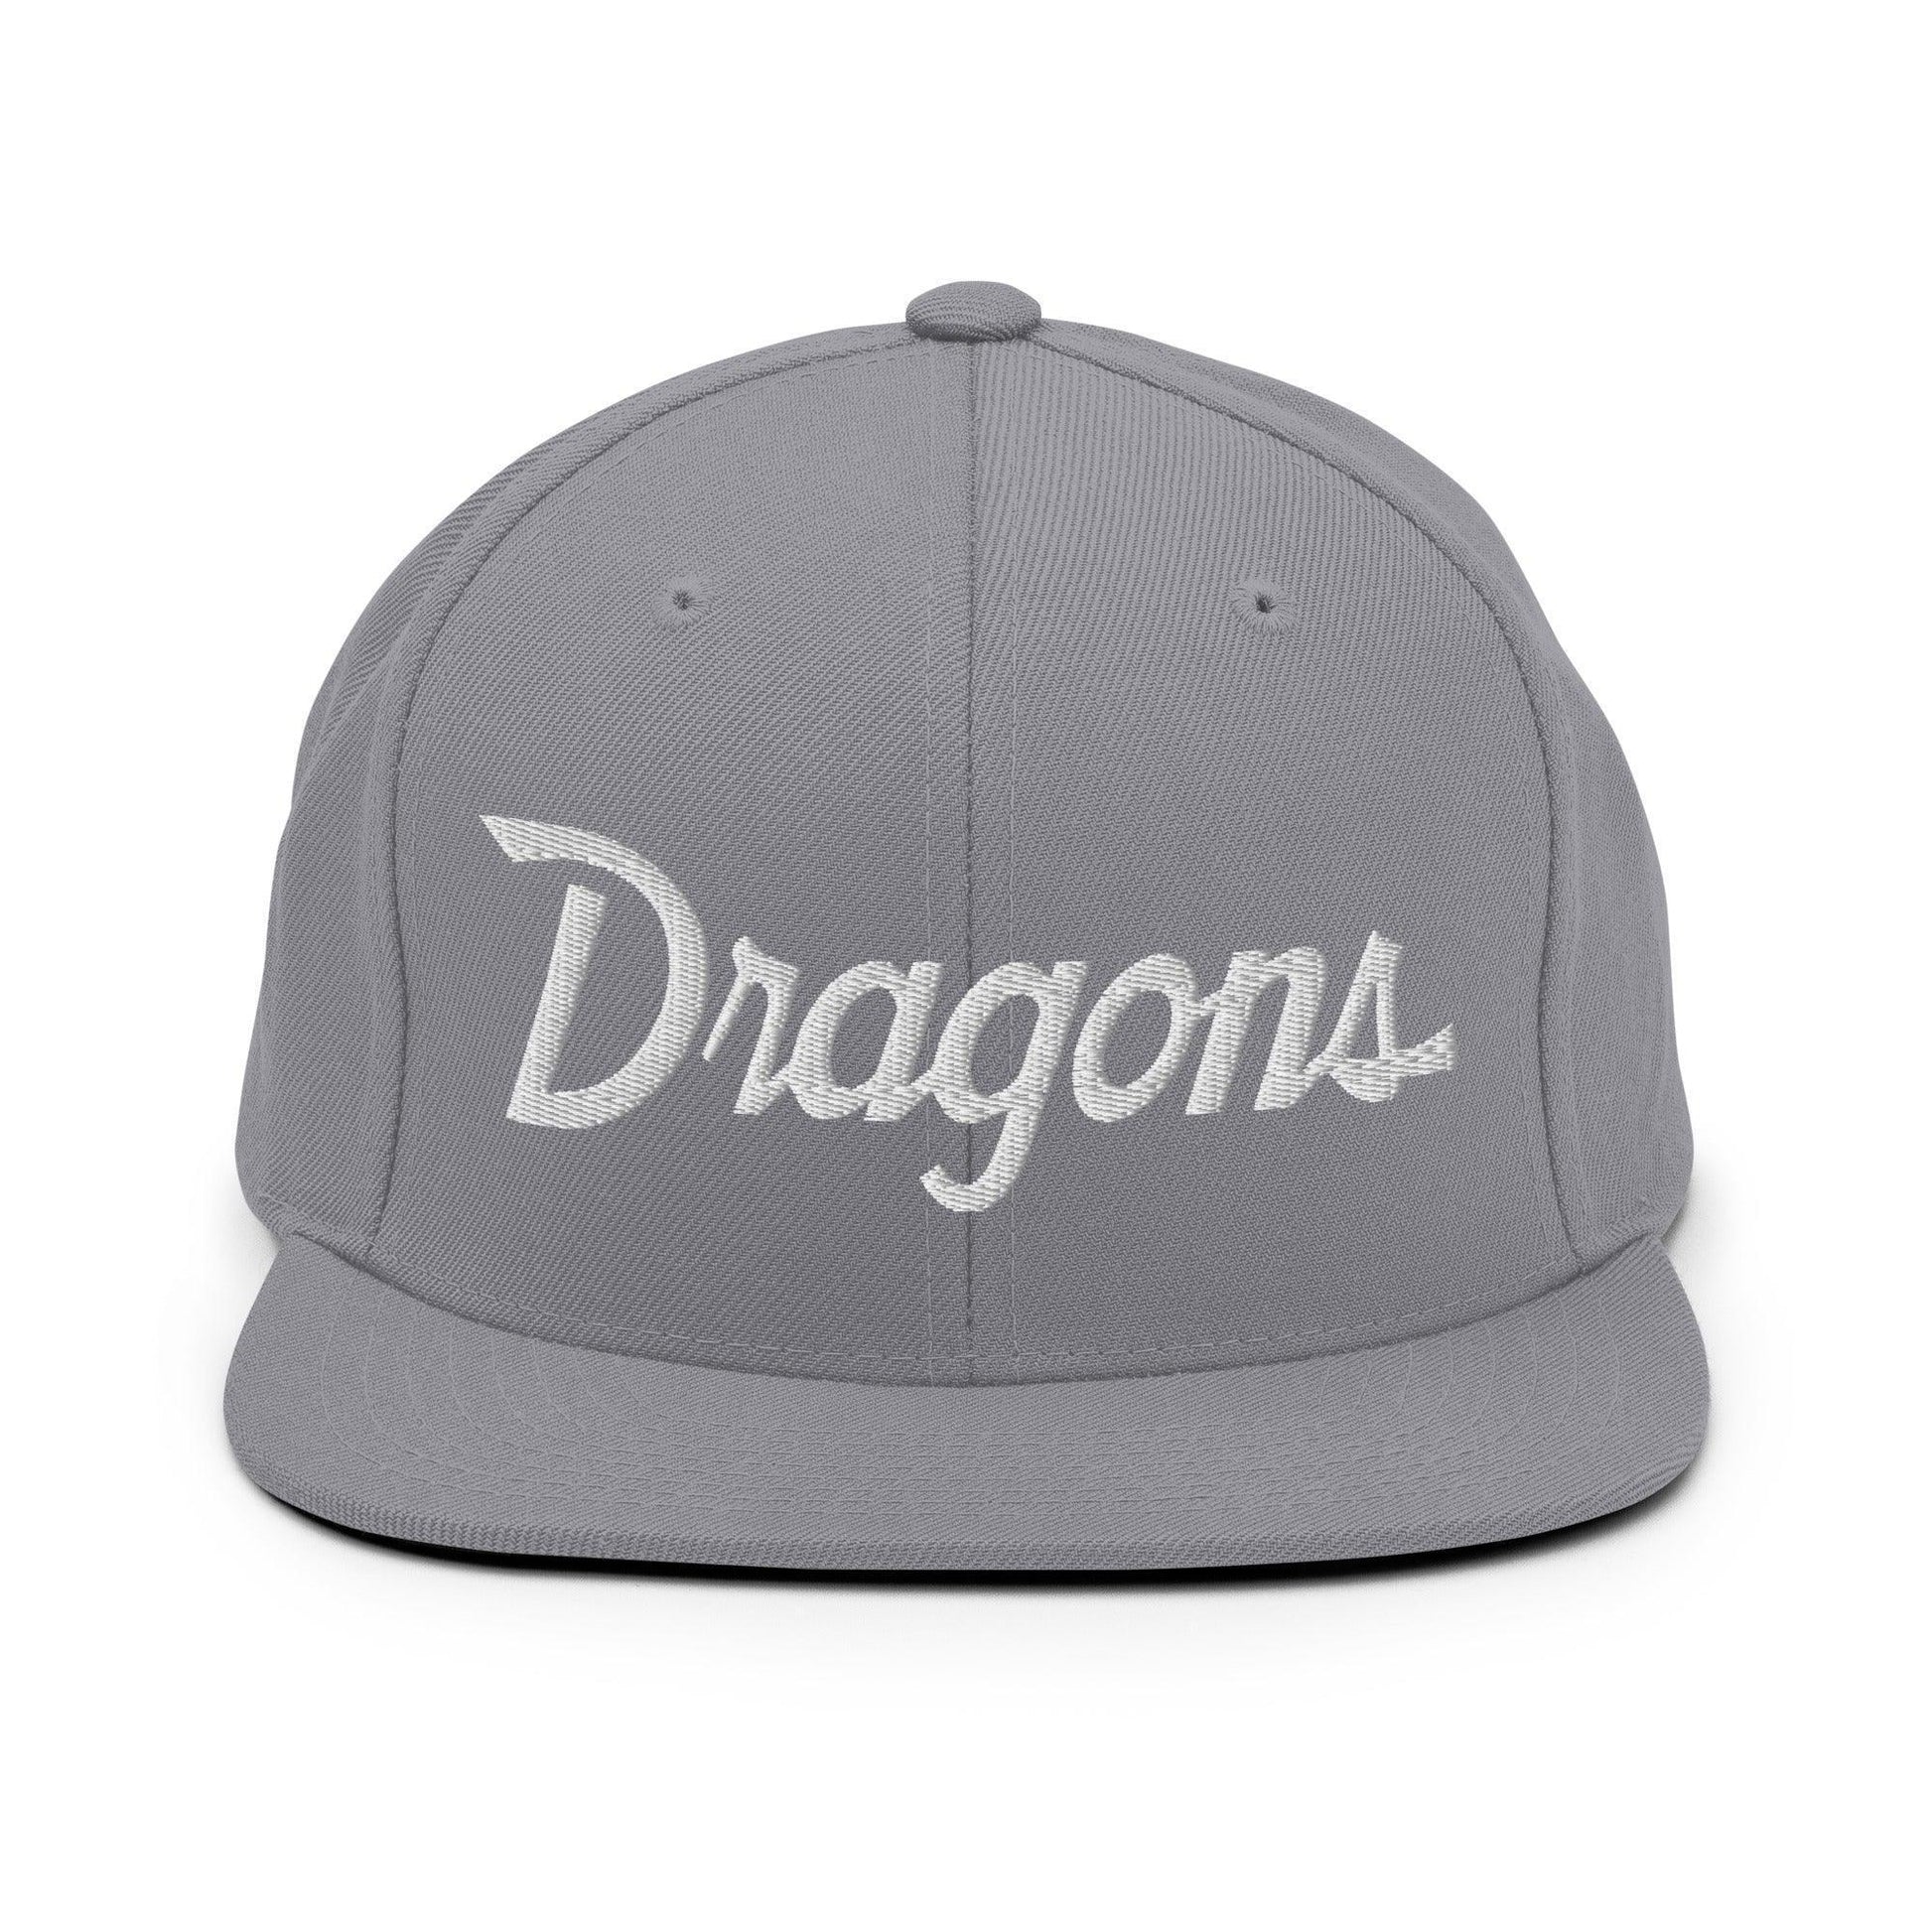 Dragons School Mascot Snapback Hat Silver